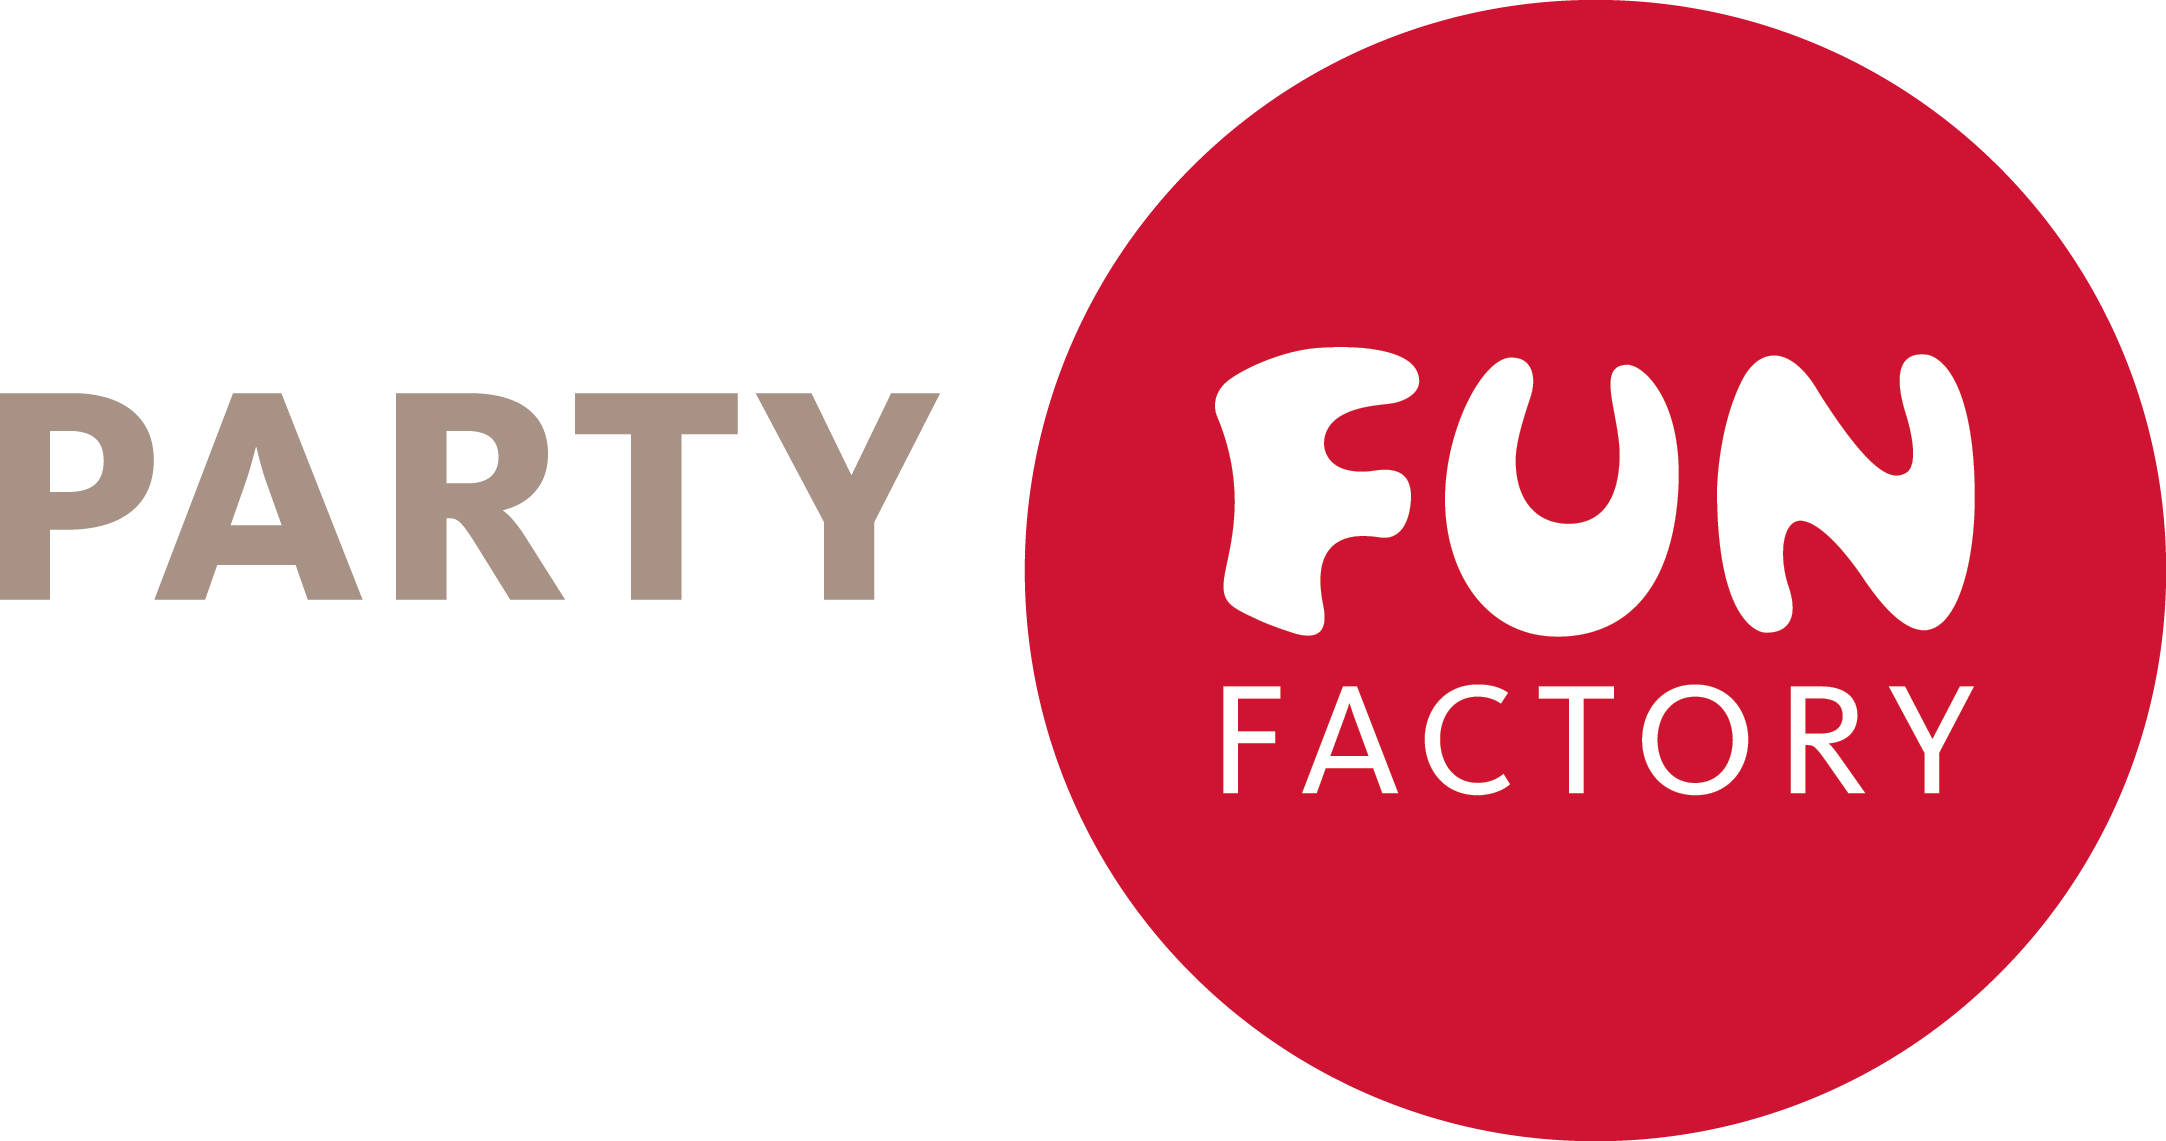 FUN Factory Party.